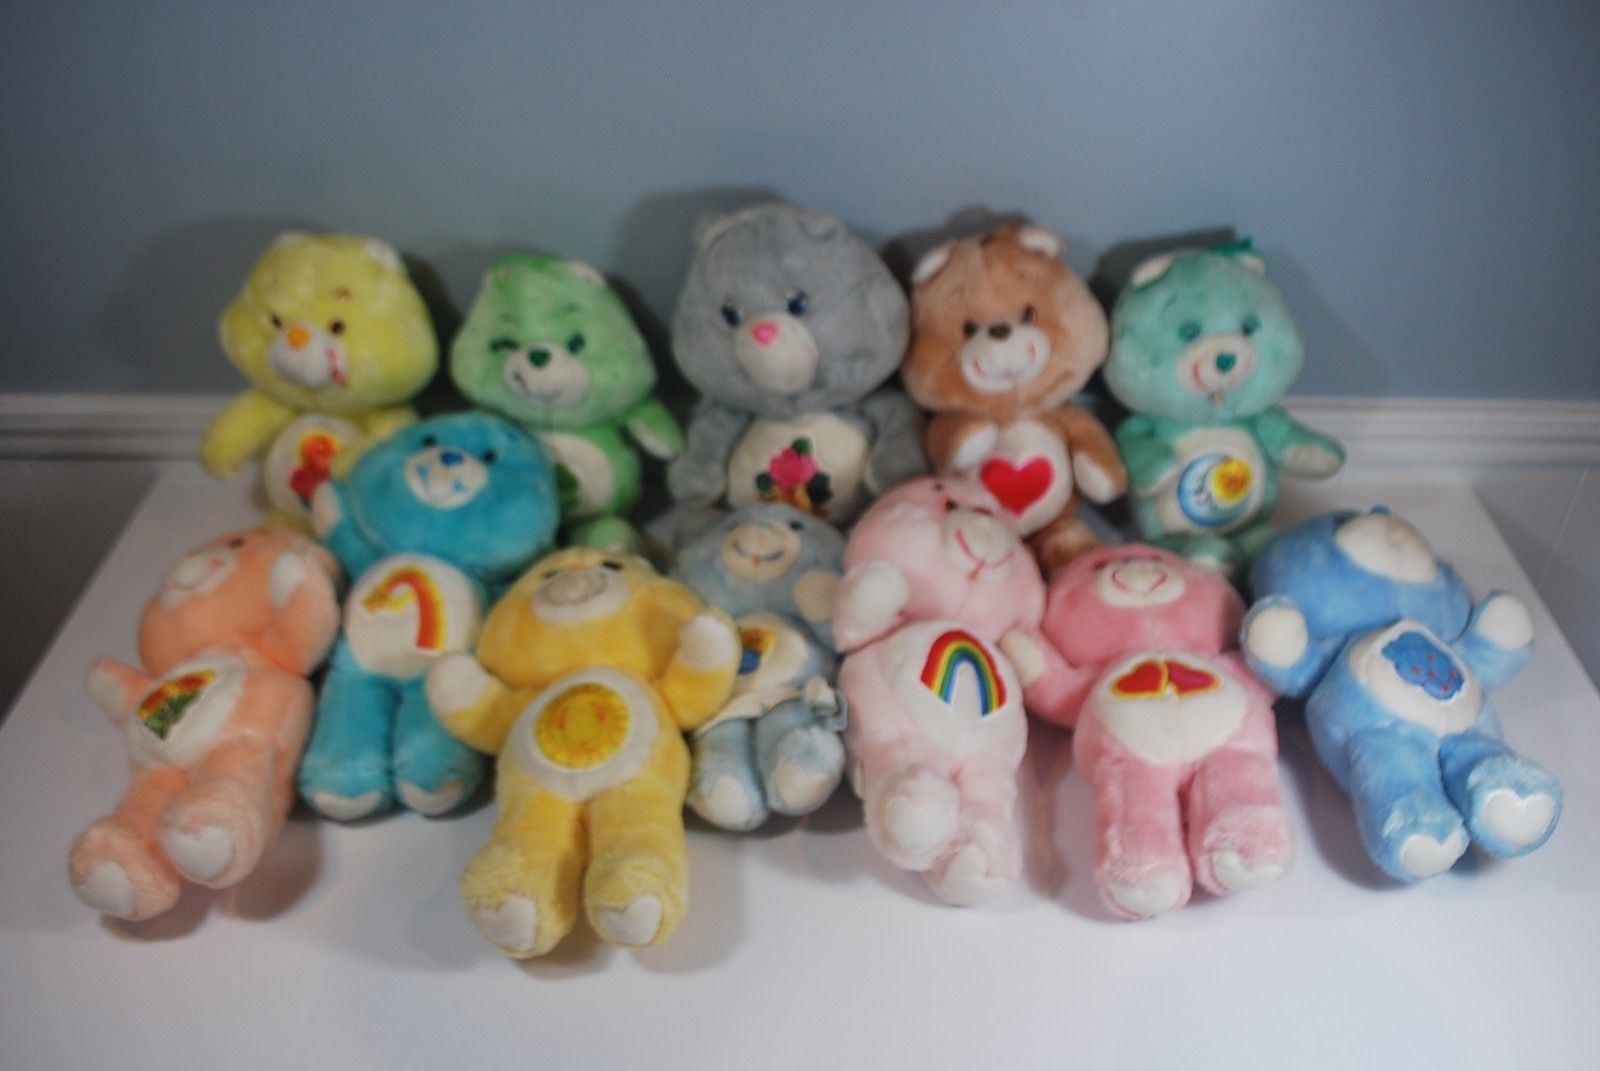  Lot of 12 Vintage Original 1983 Care Bears Plush Dolls 13” Kenner 